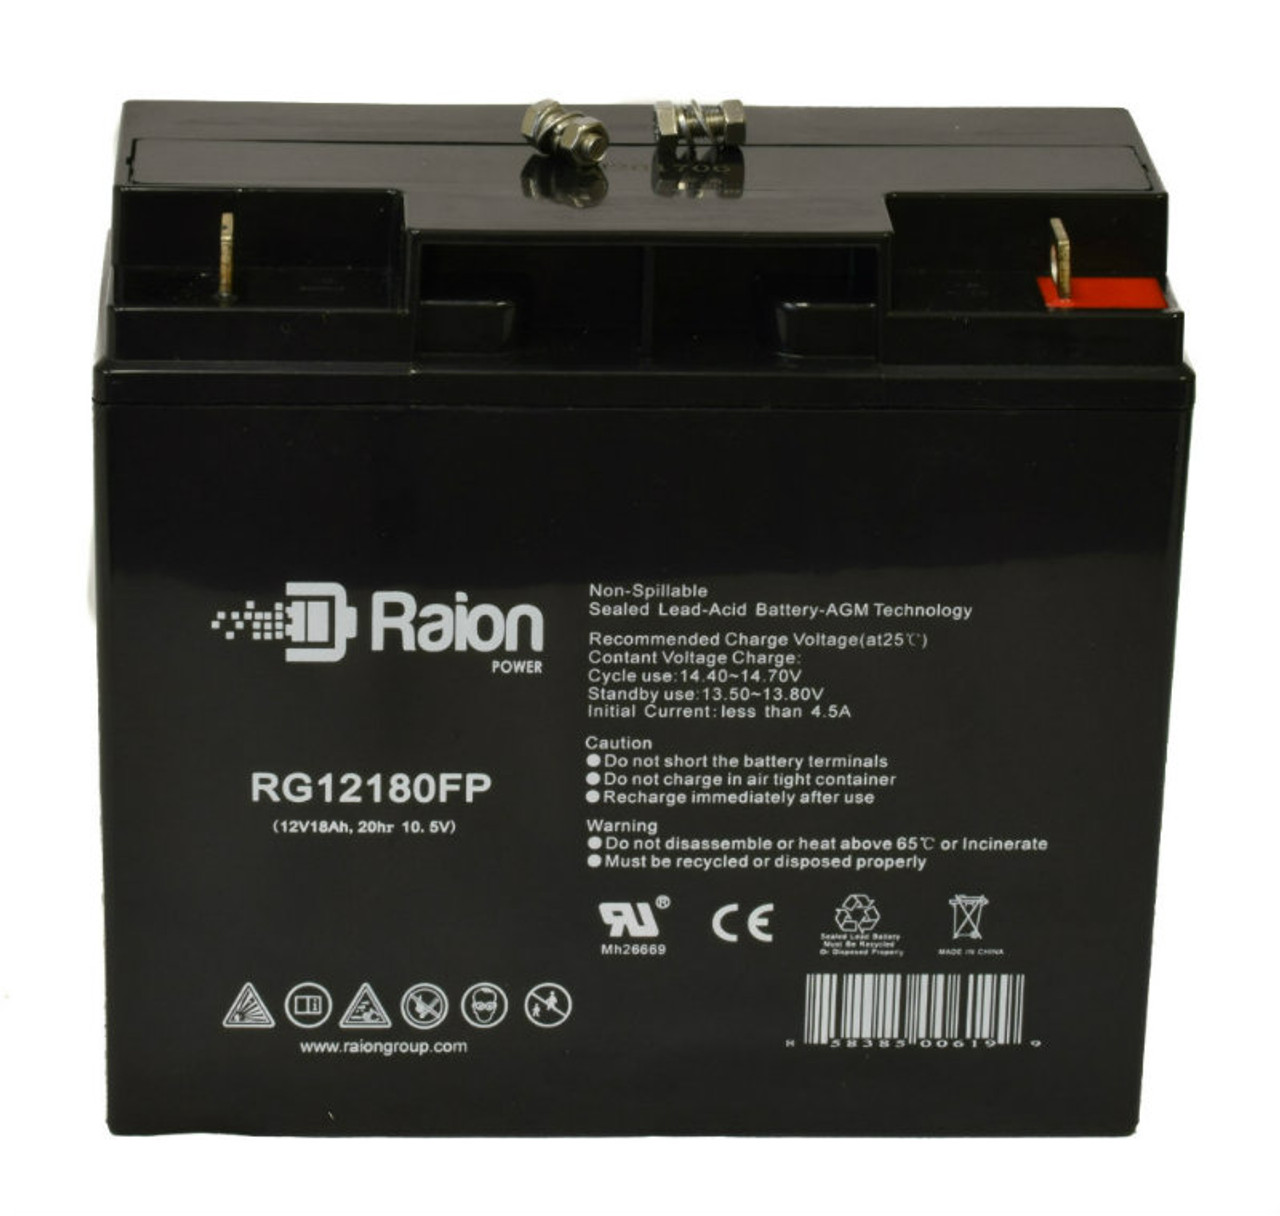 Raion Power RG12180FP 12V 18Ah Lead Acid Battery for Draeger Medical Evita-Trolley